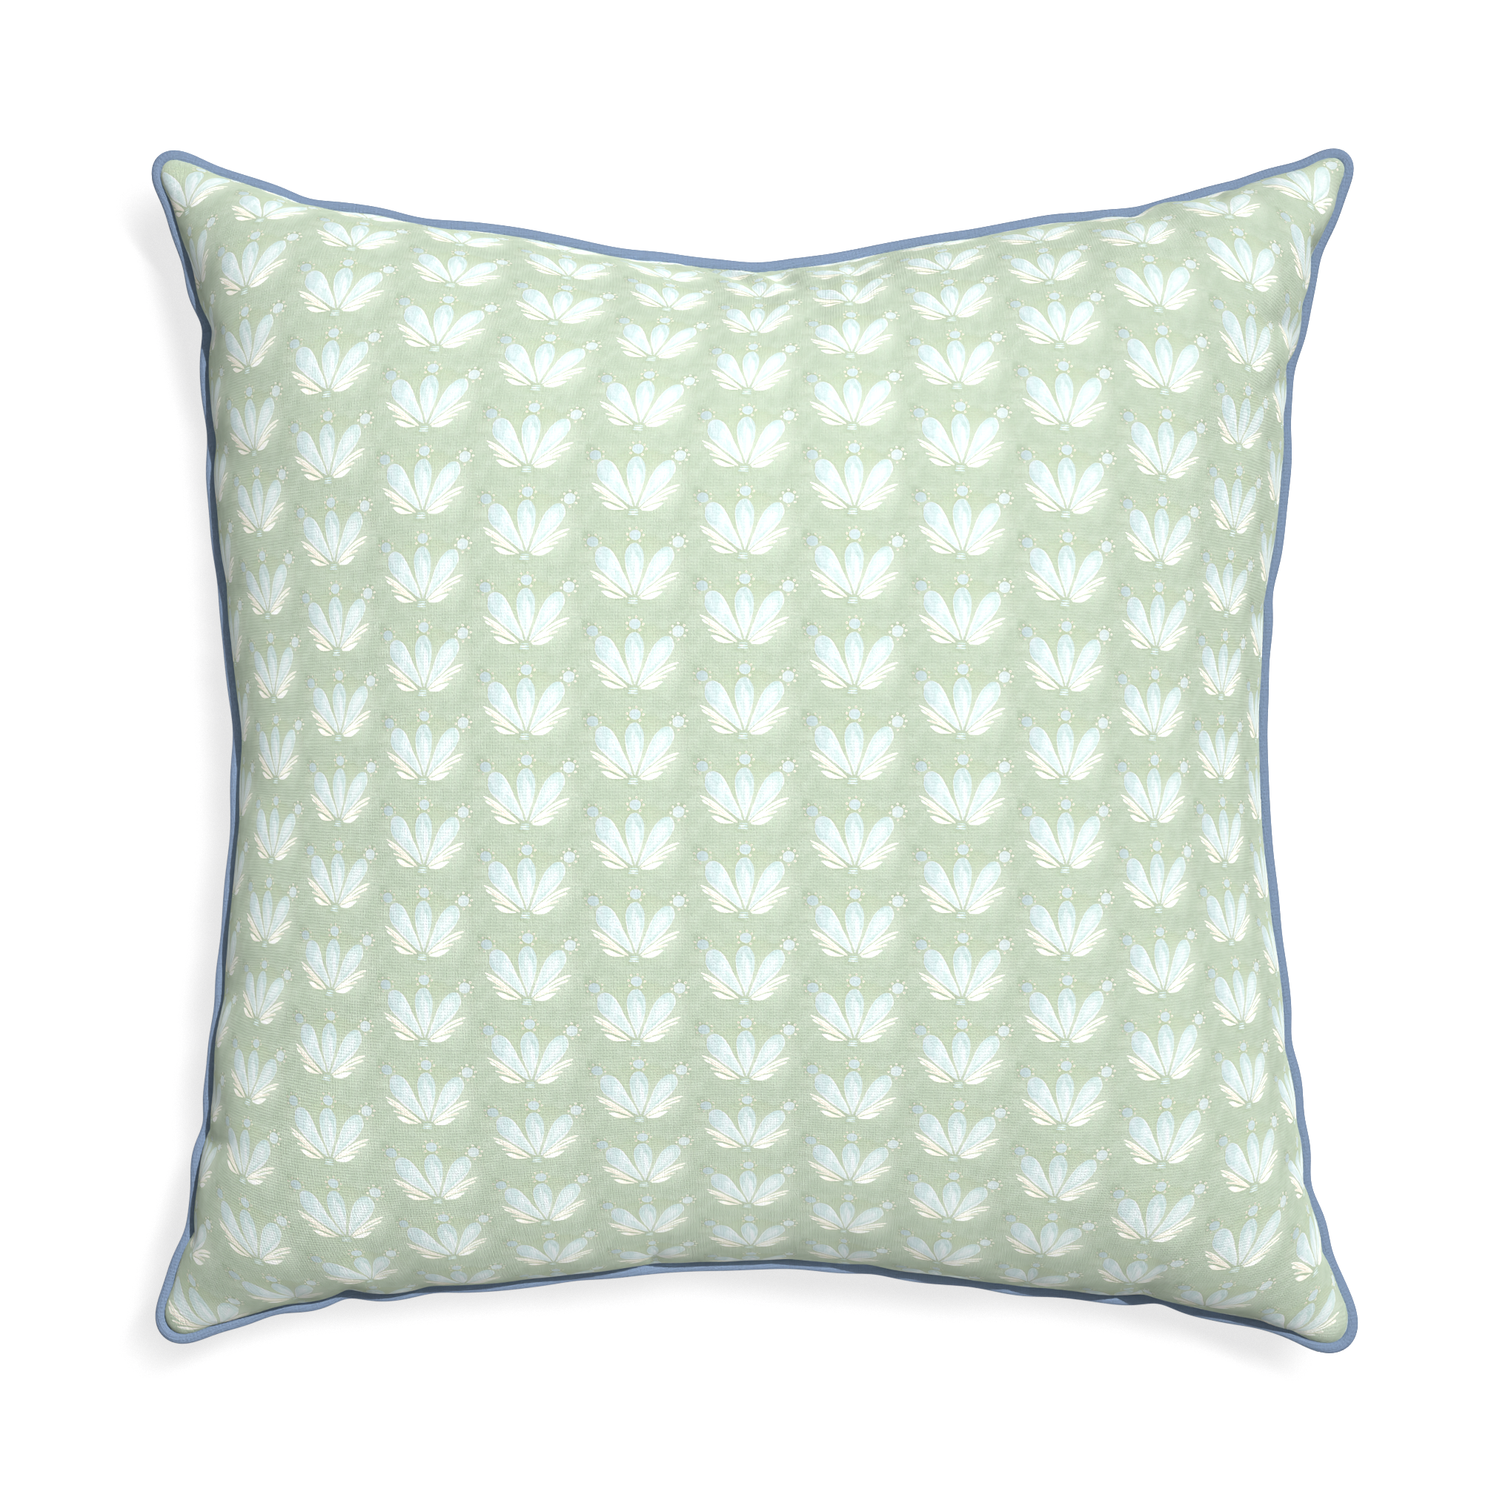 Euro-sham serena sea salt custom pillow with sky piping on white background